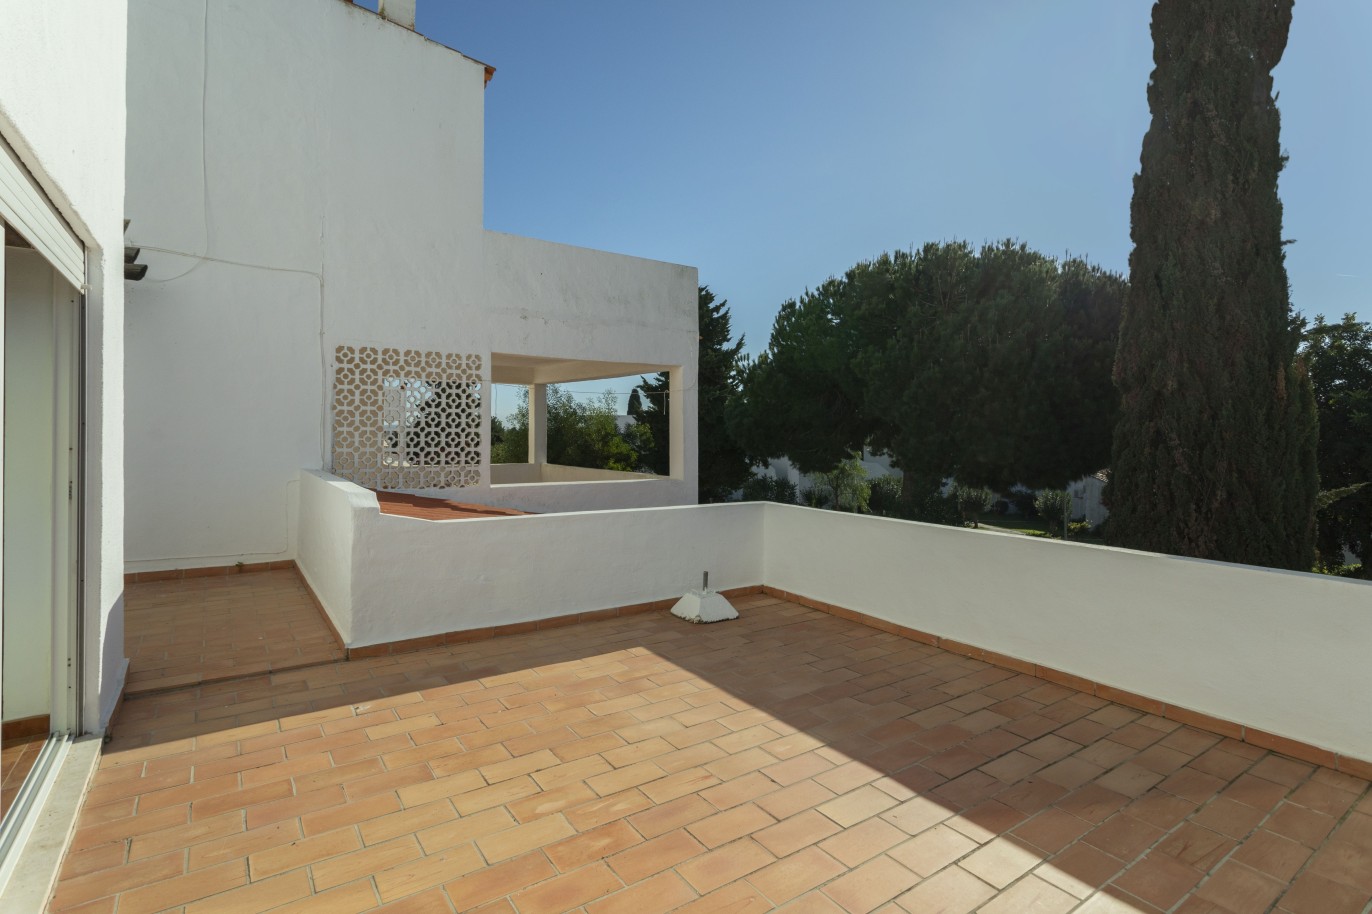 2-bedroom Apartment Duplex, sea view, for sale in Porches, Algarve_247762